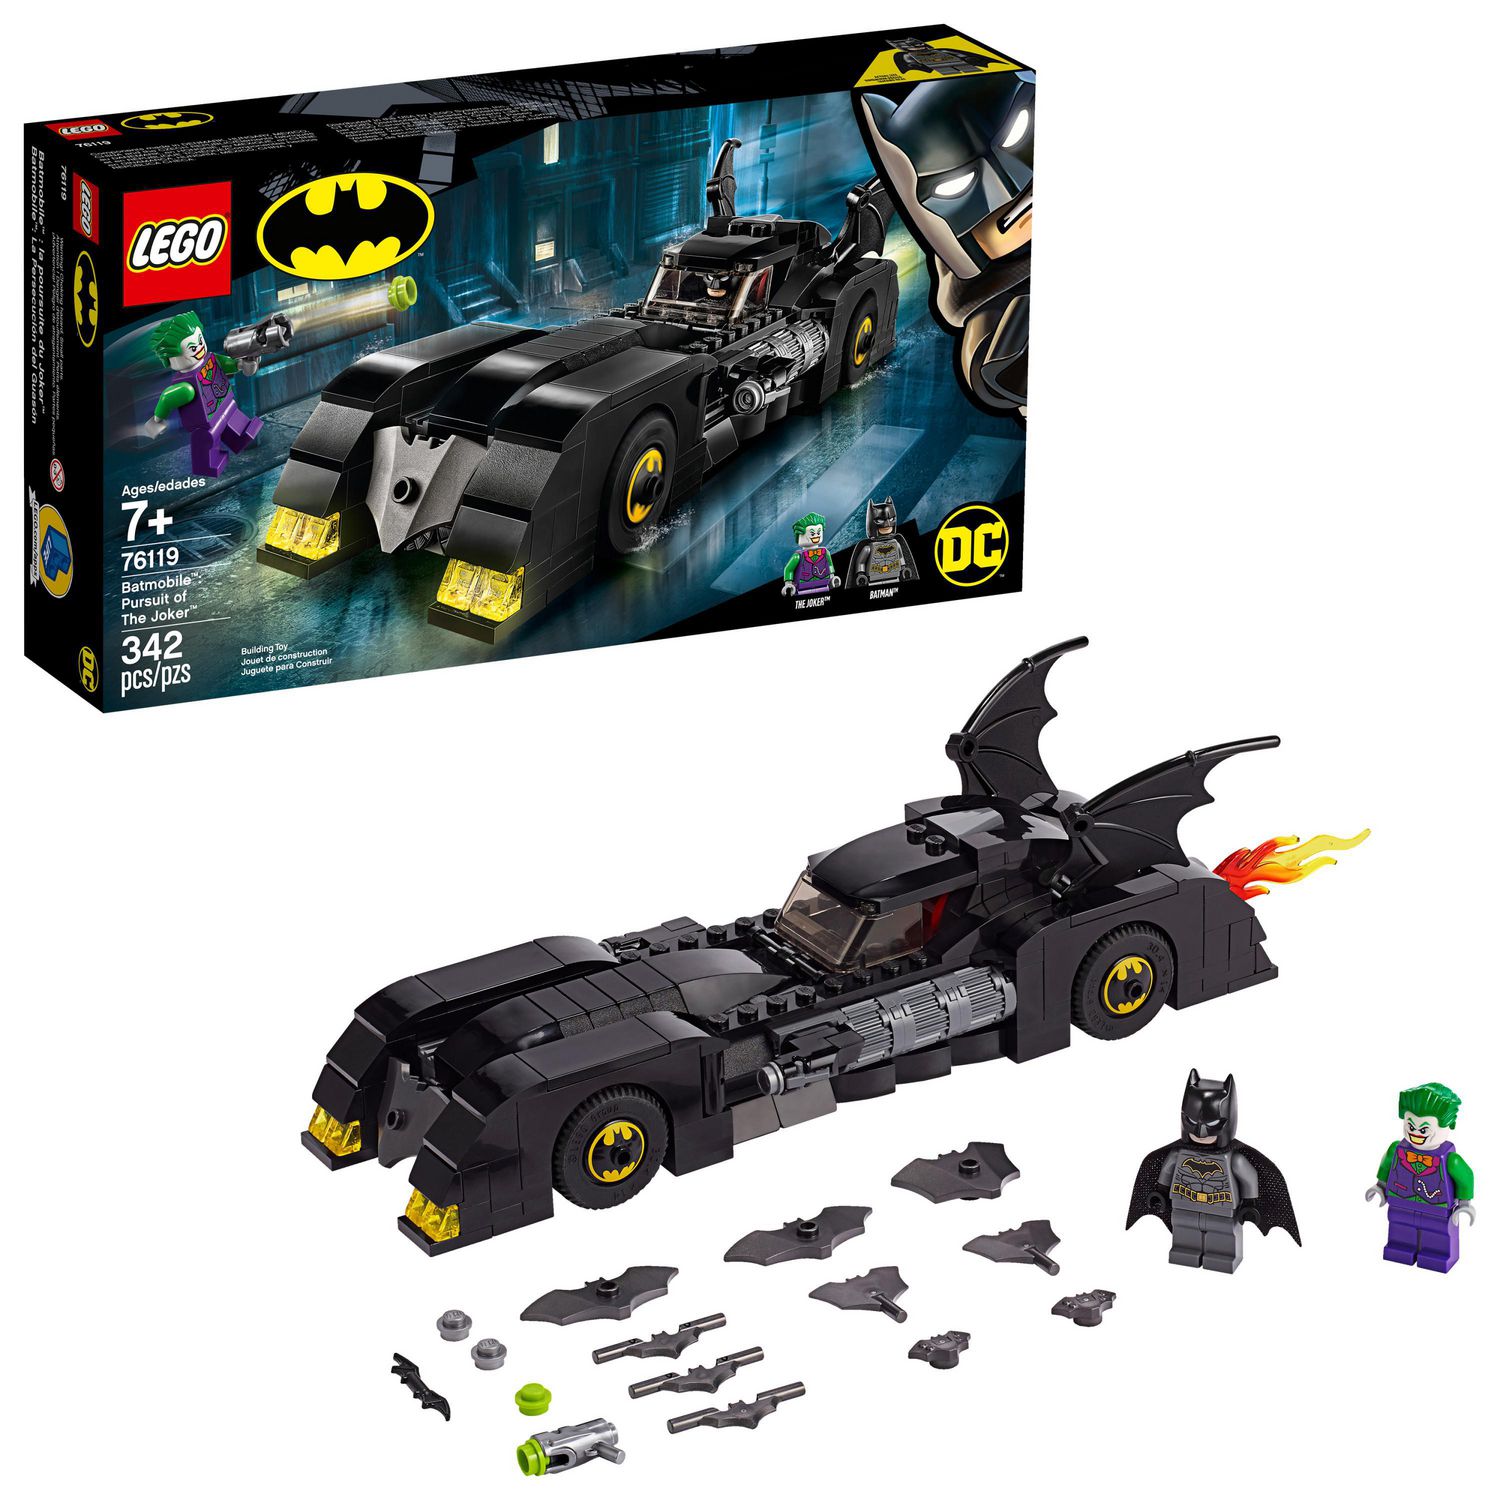 batman and batmobile toy